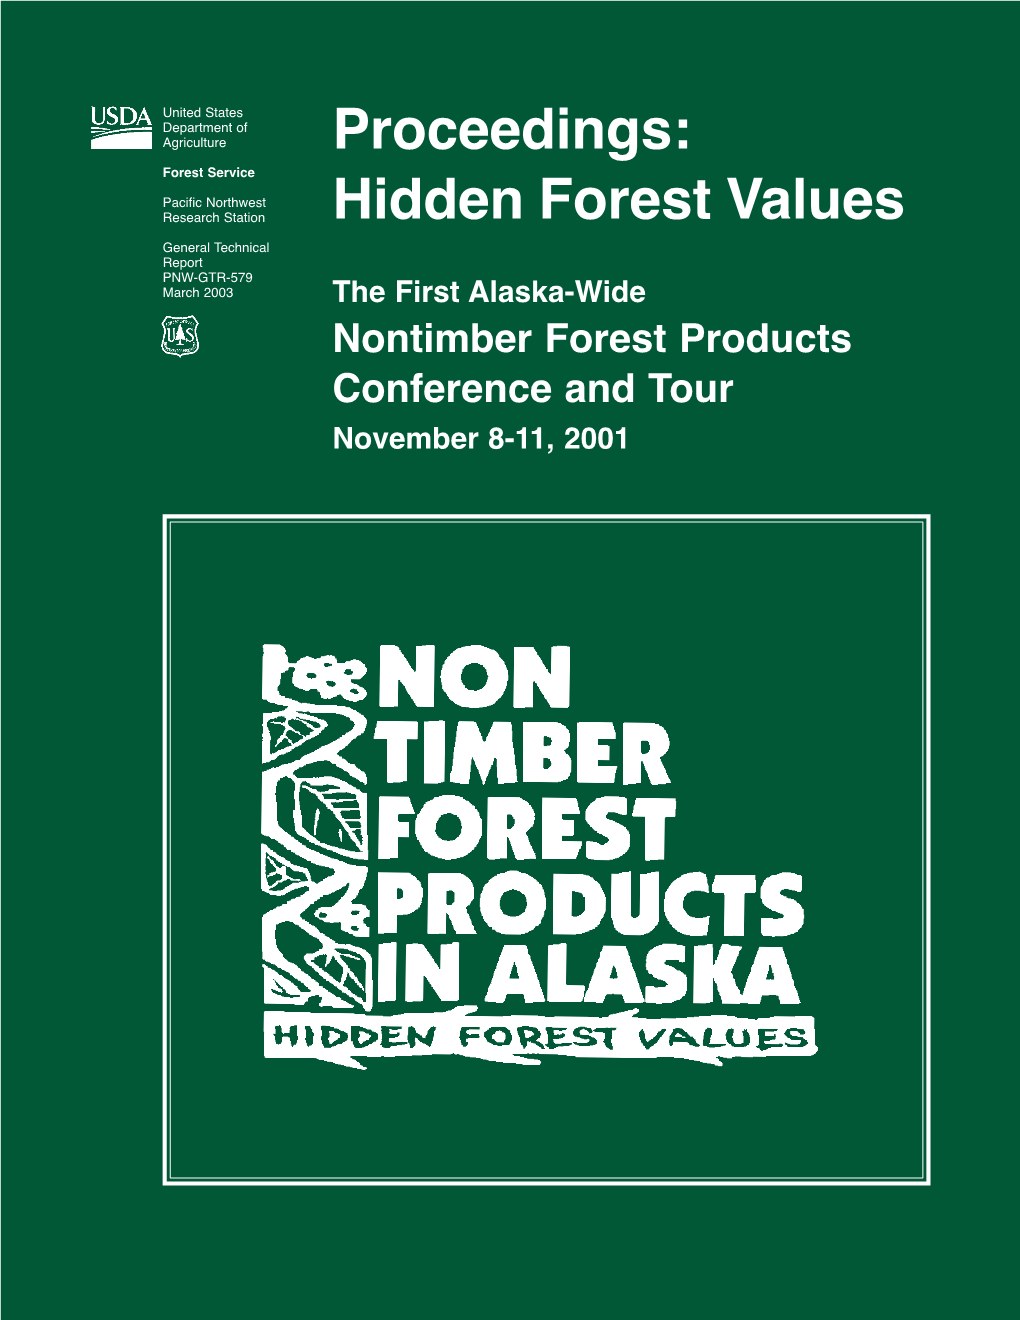 Hidden Forest Values